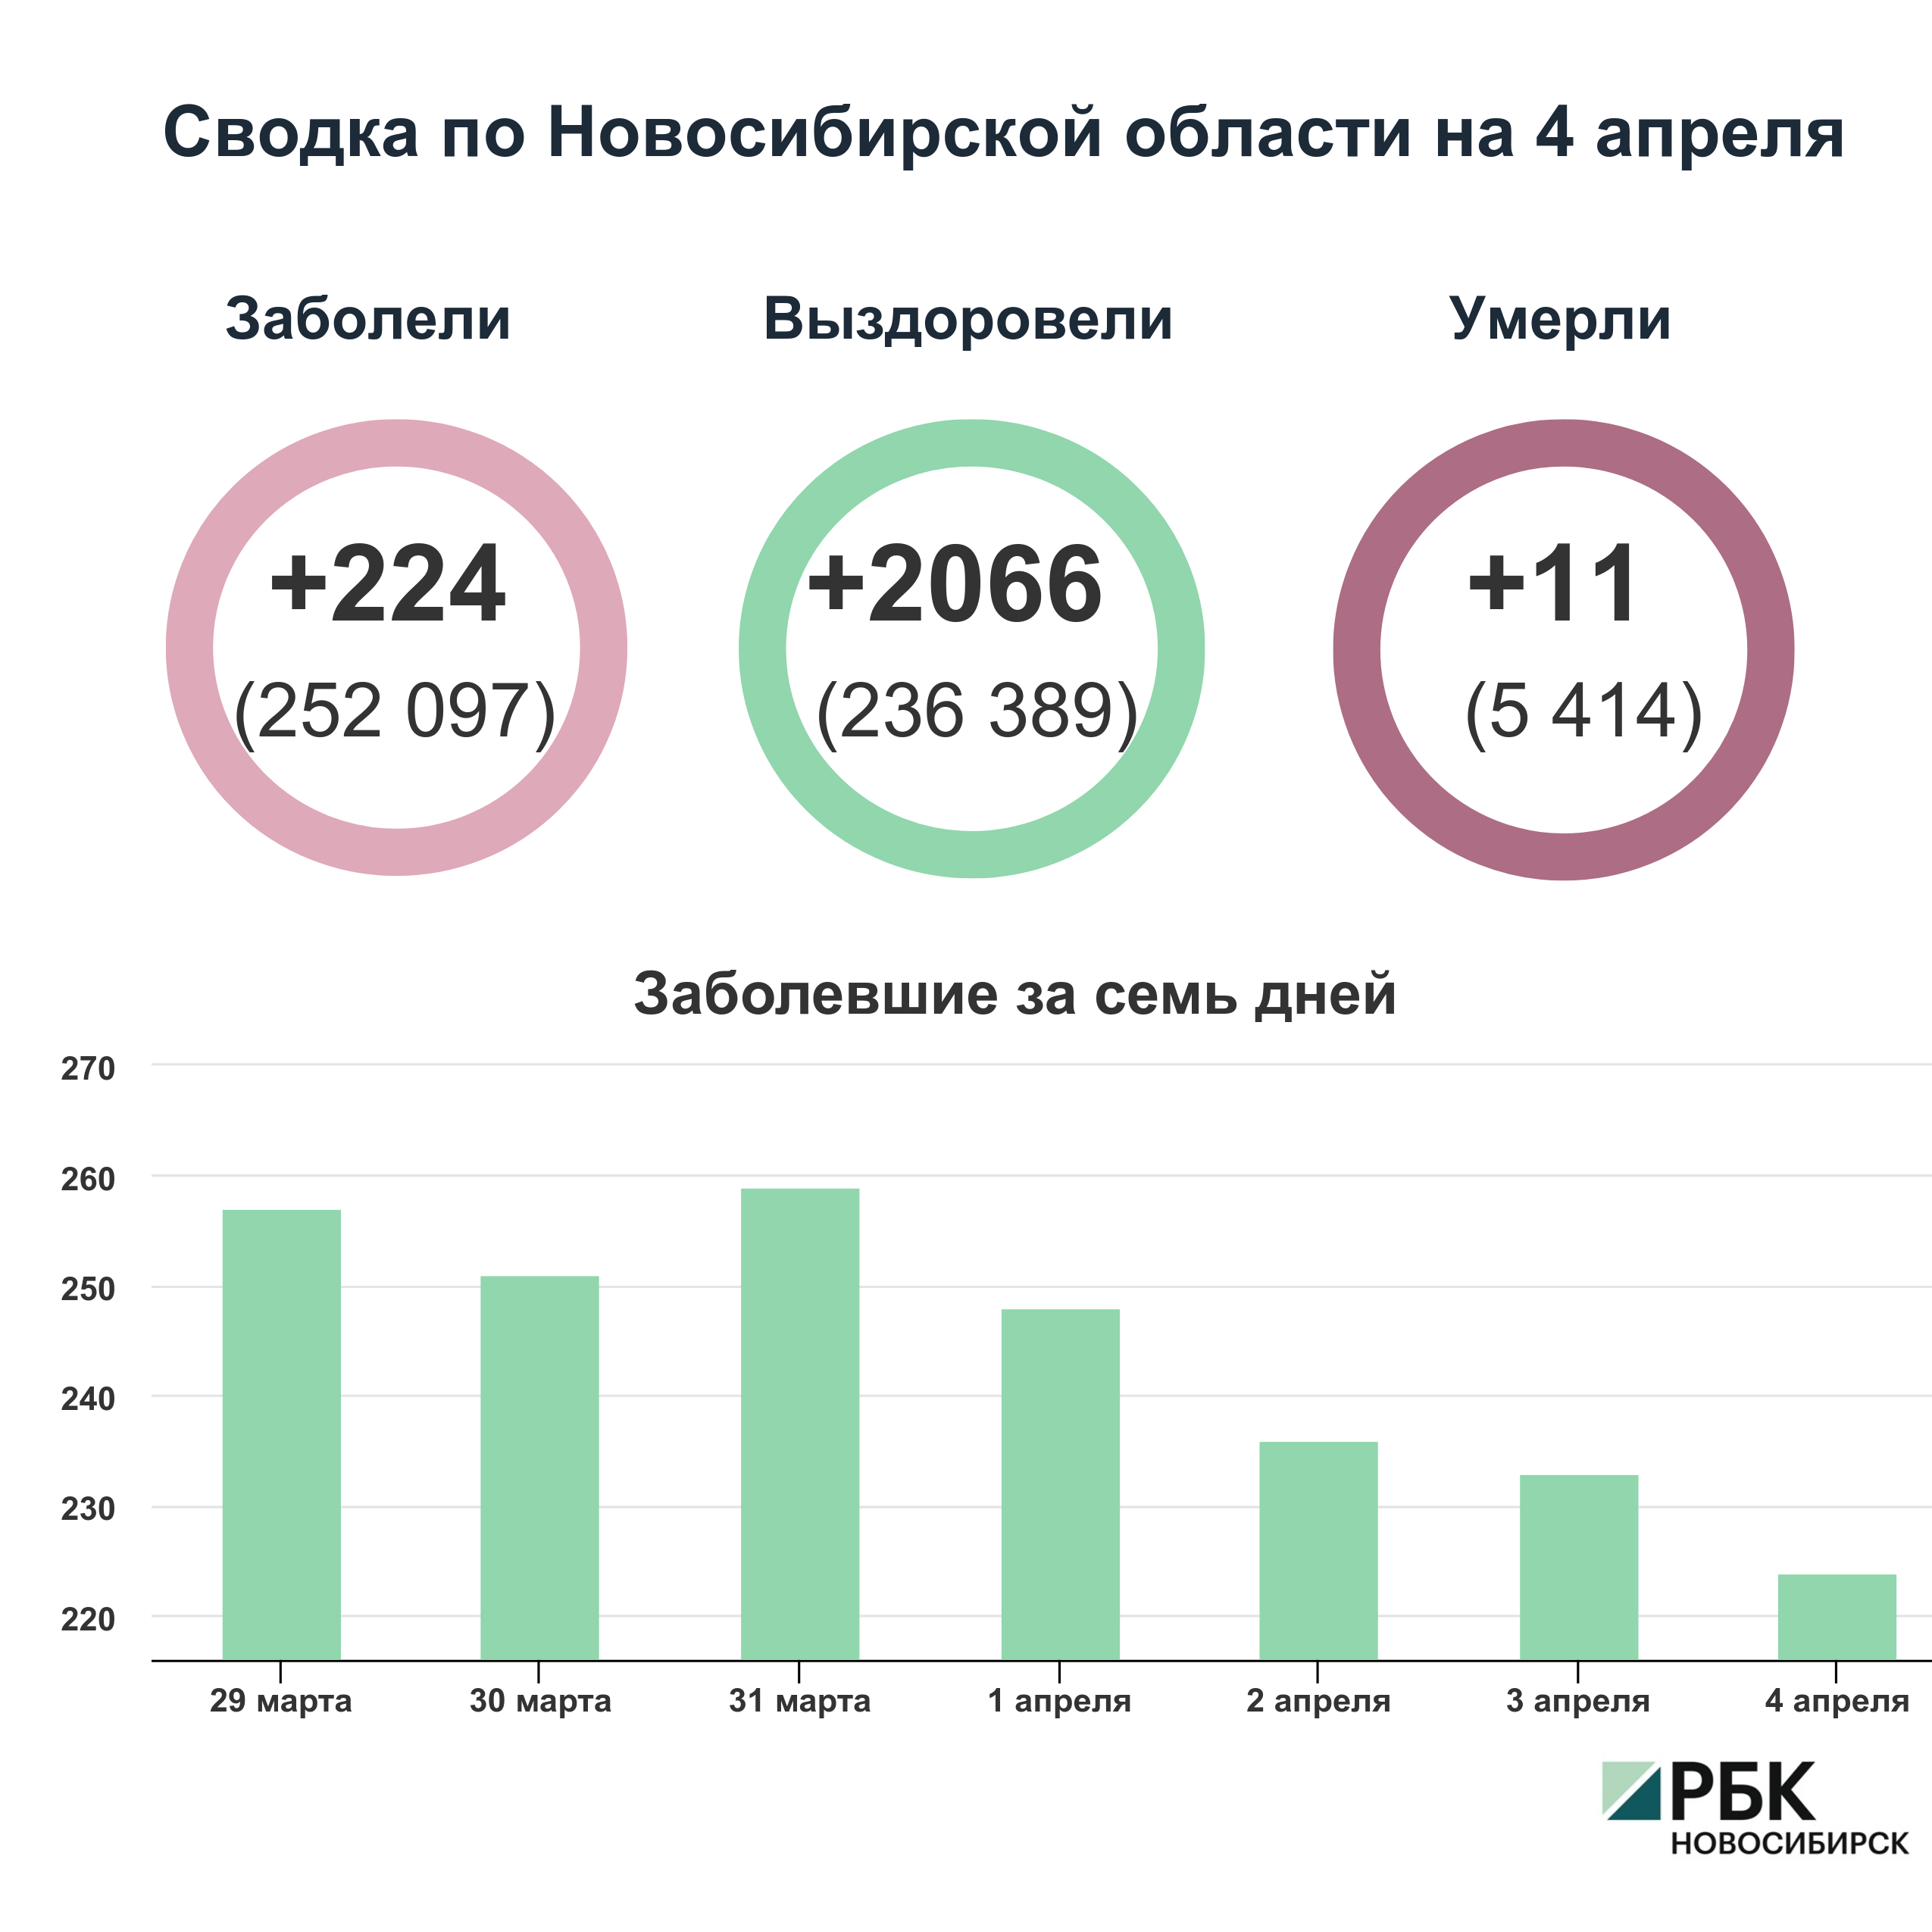 Коронавирус в Новосибирске: сводка на 4 апреля